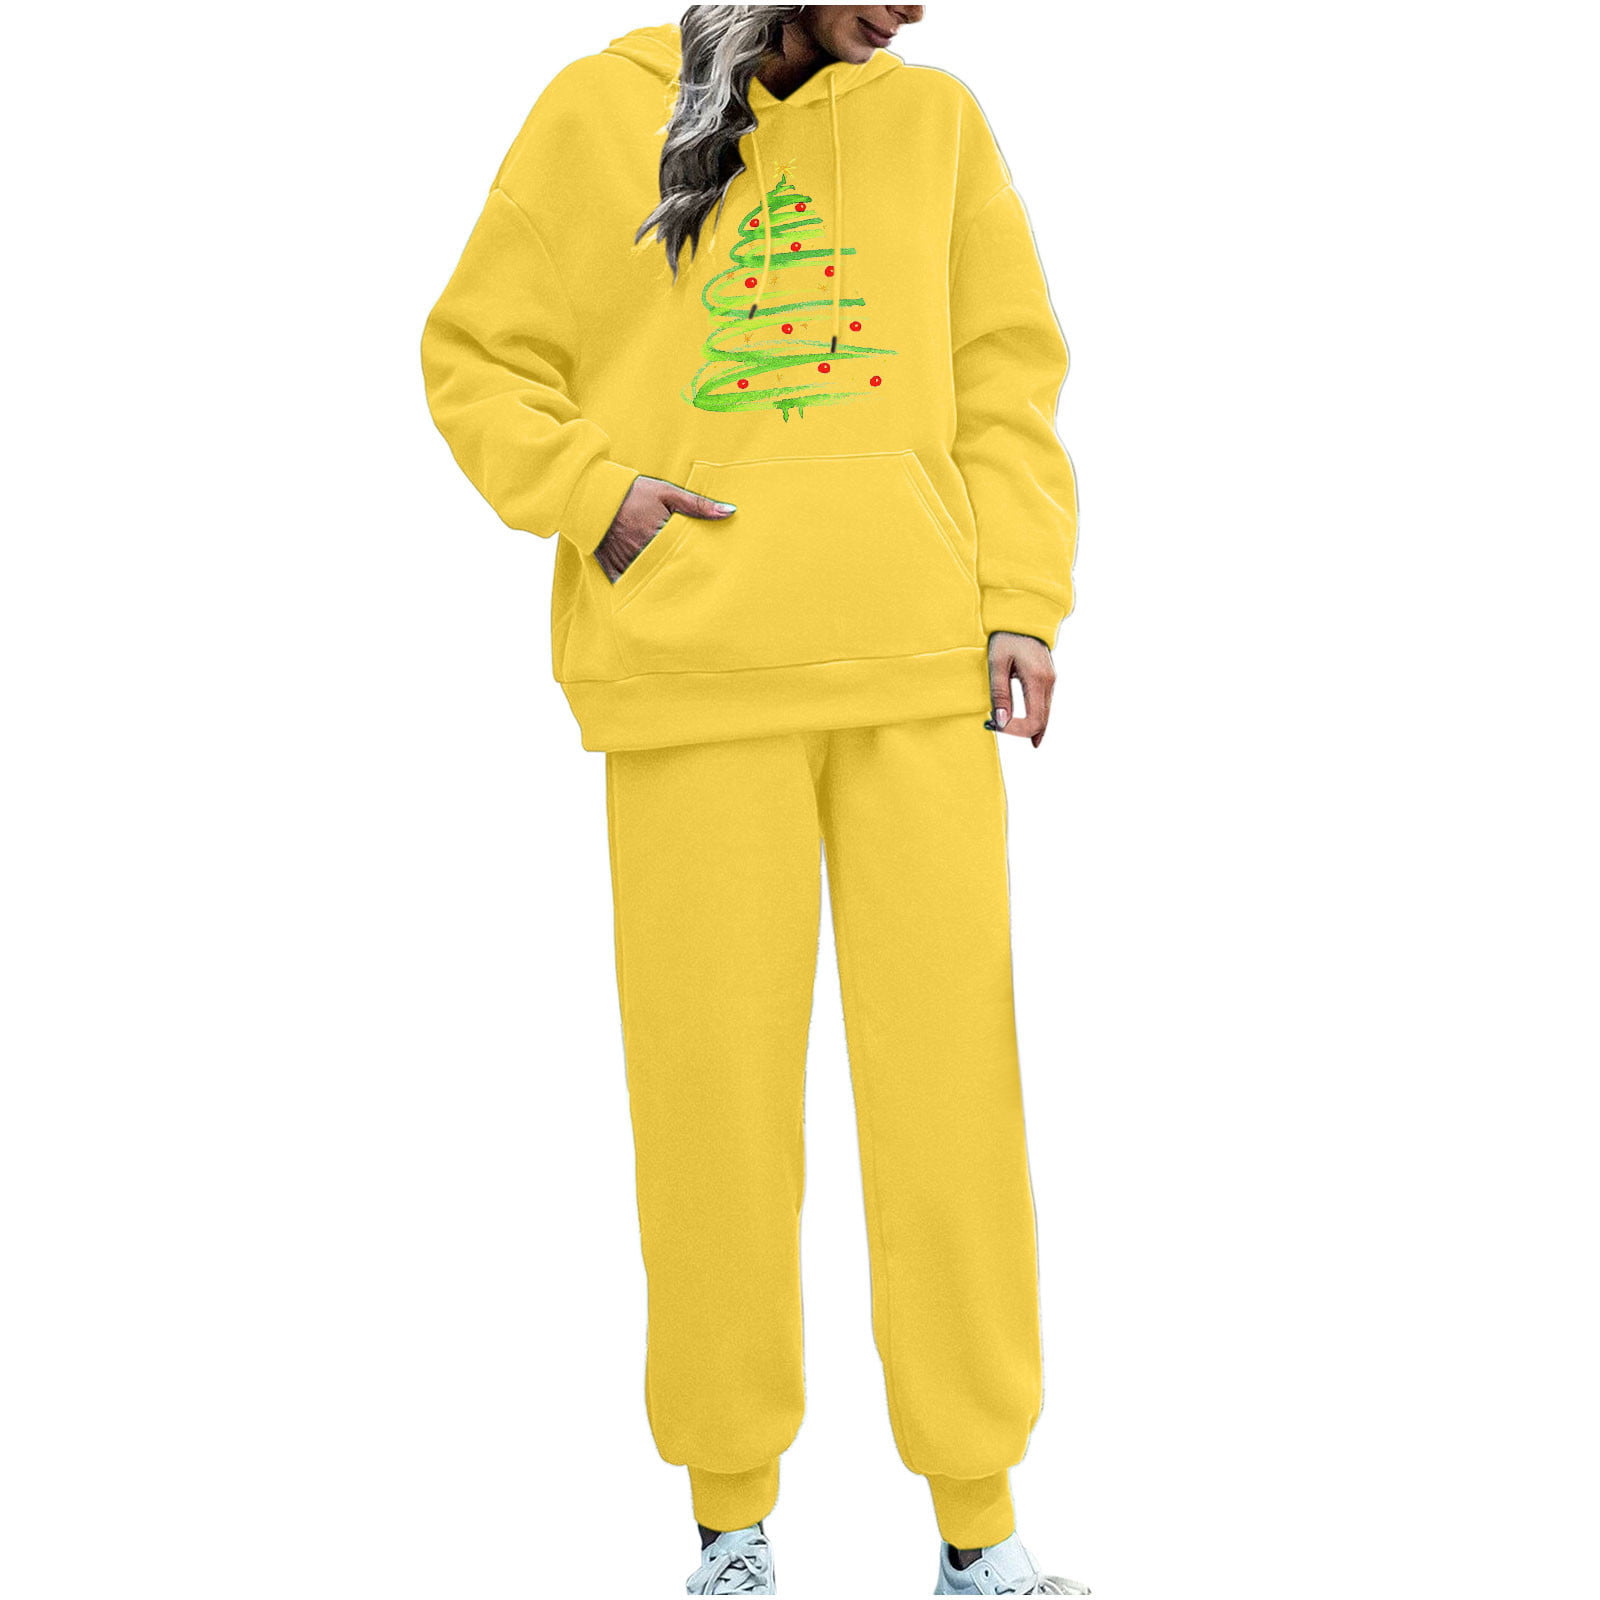 QIPOPIQ Jogging Suits Women Women's Set Hoodies Christmas Tracksuit 2 Piece Hooded Athletic Sweatsuits Casual Running Jogging Sport Suit Sets - Walmart.com